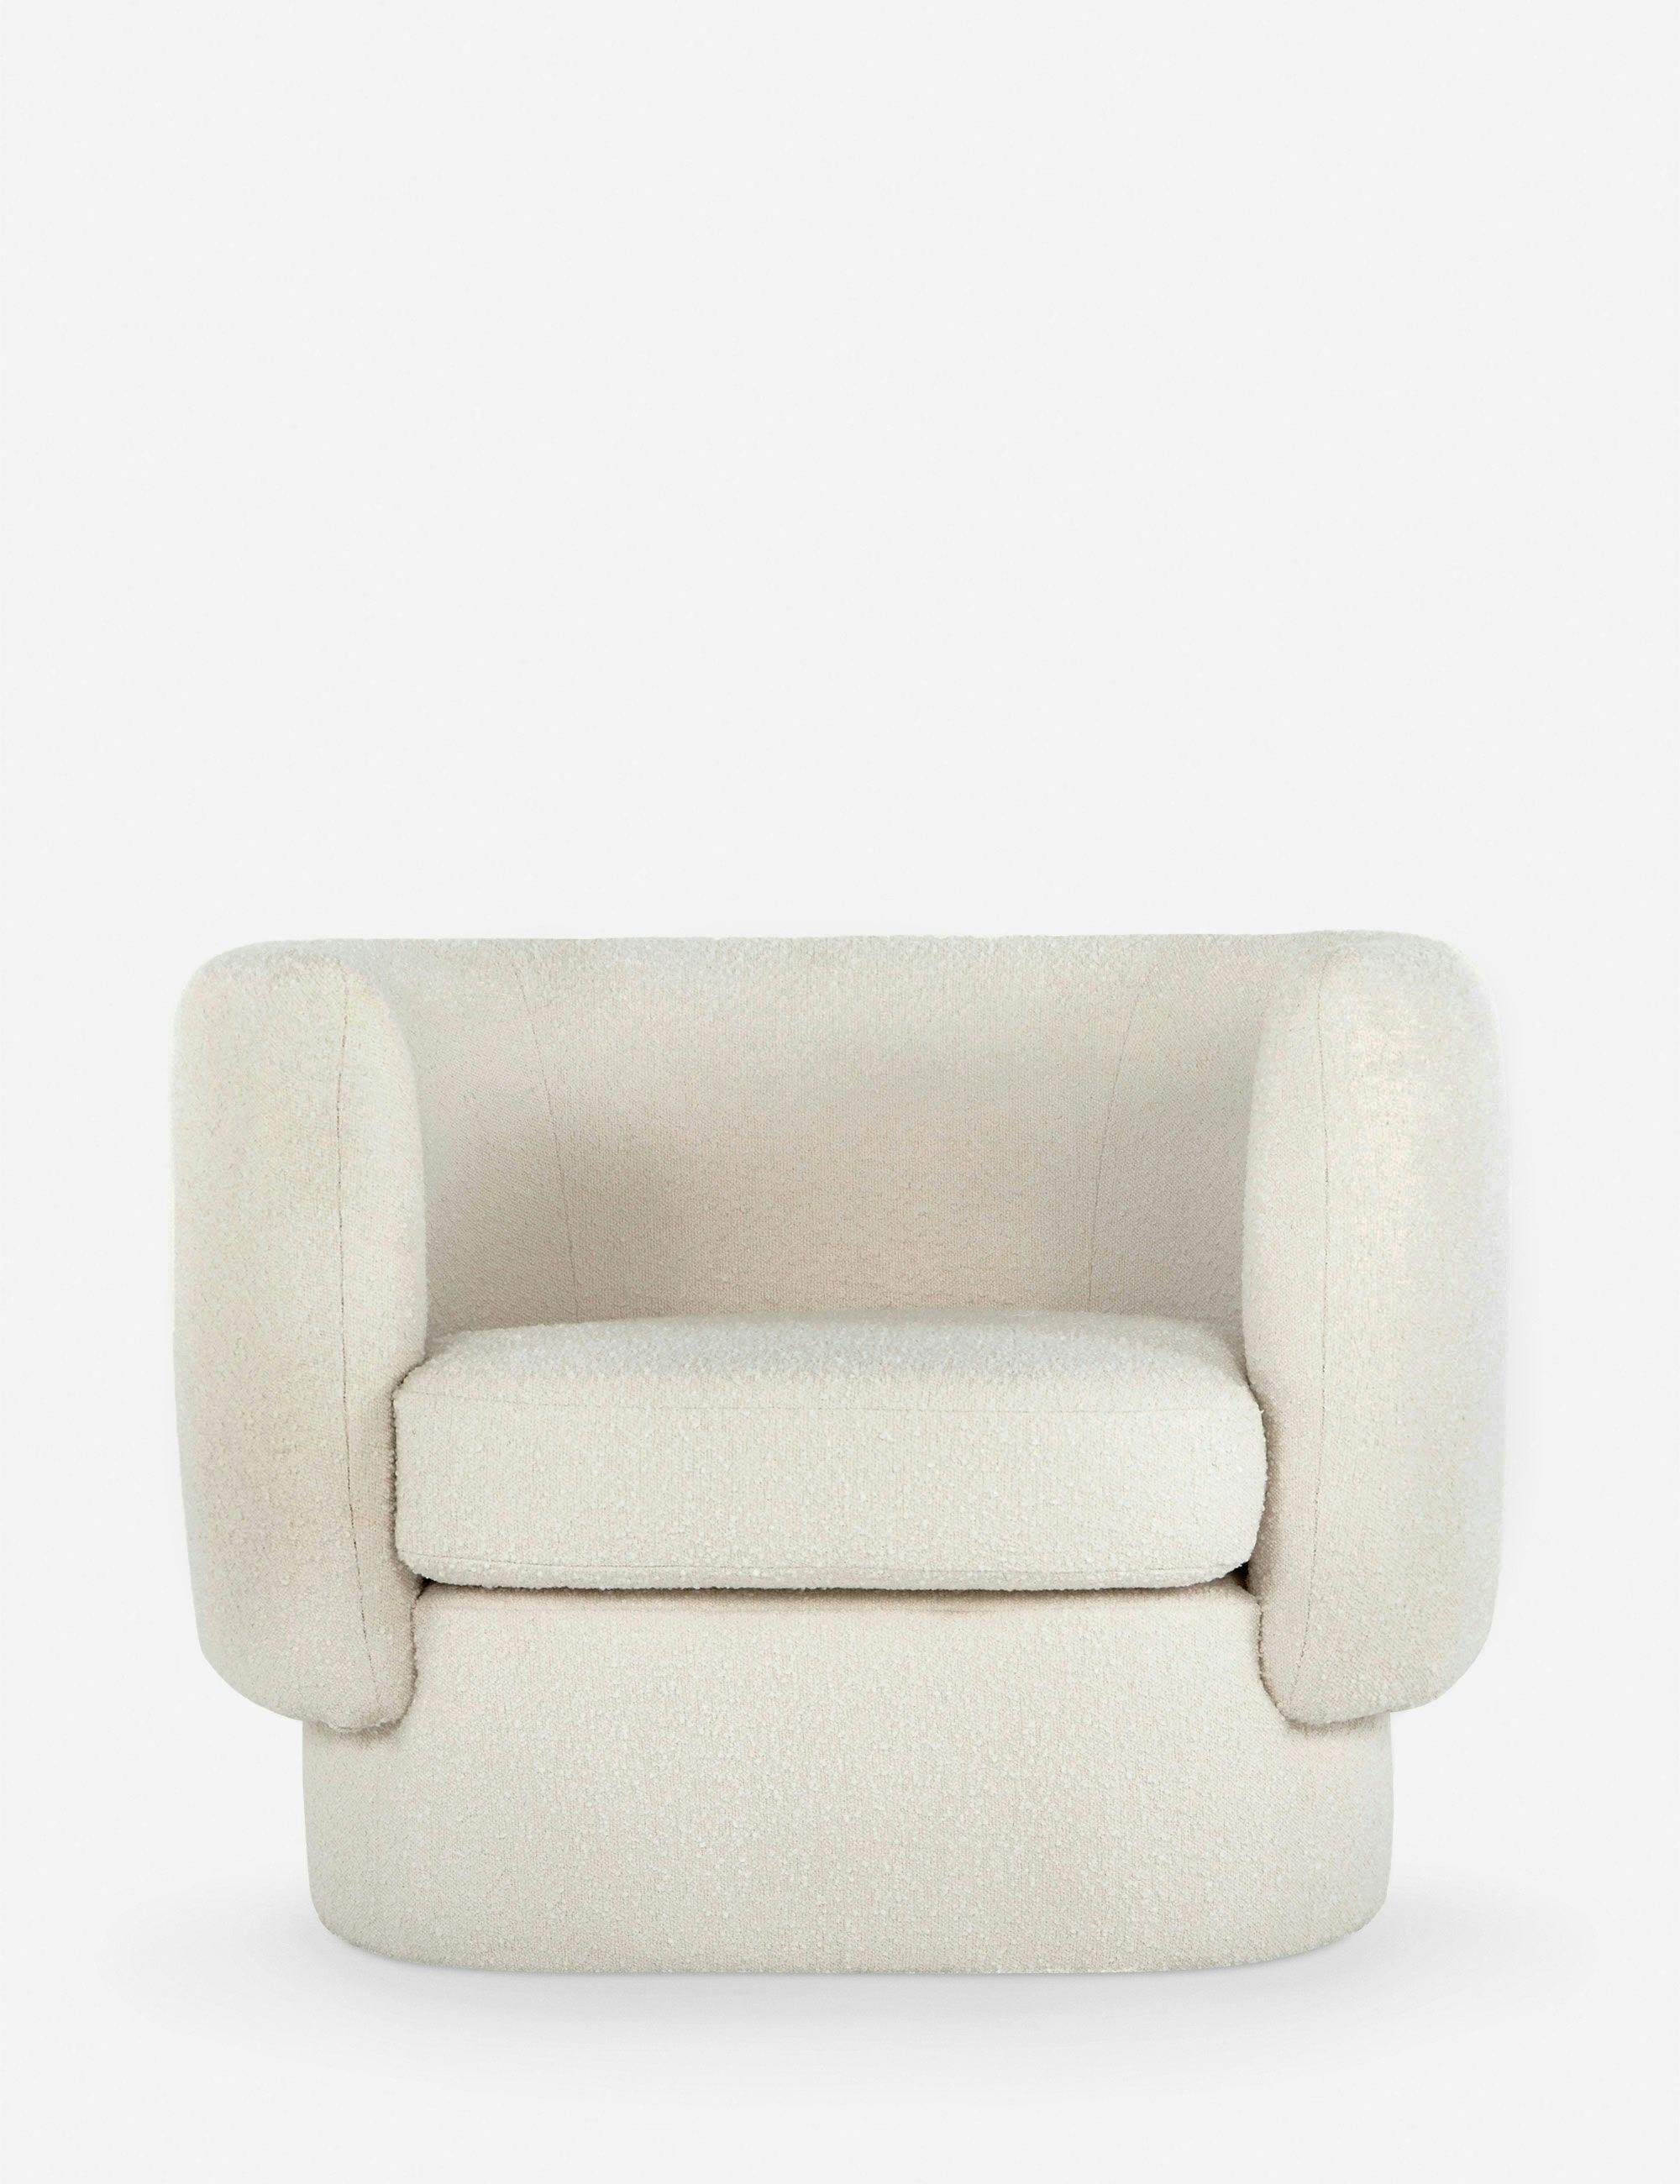 Zaha White Contemporary Fabric Accent Chair